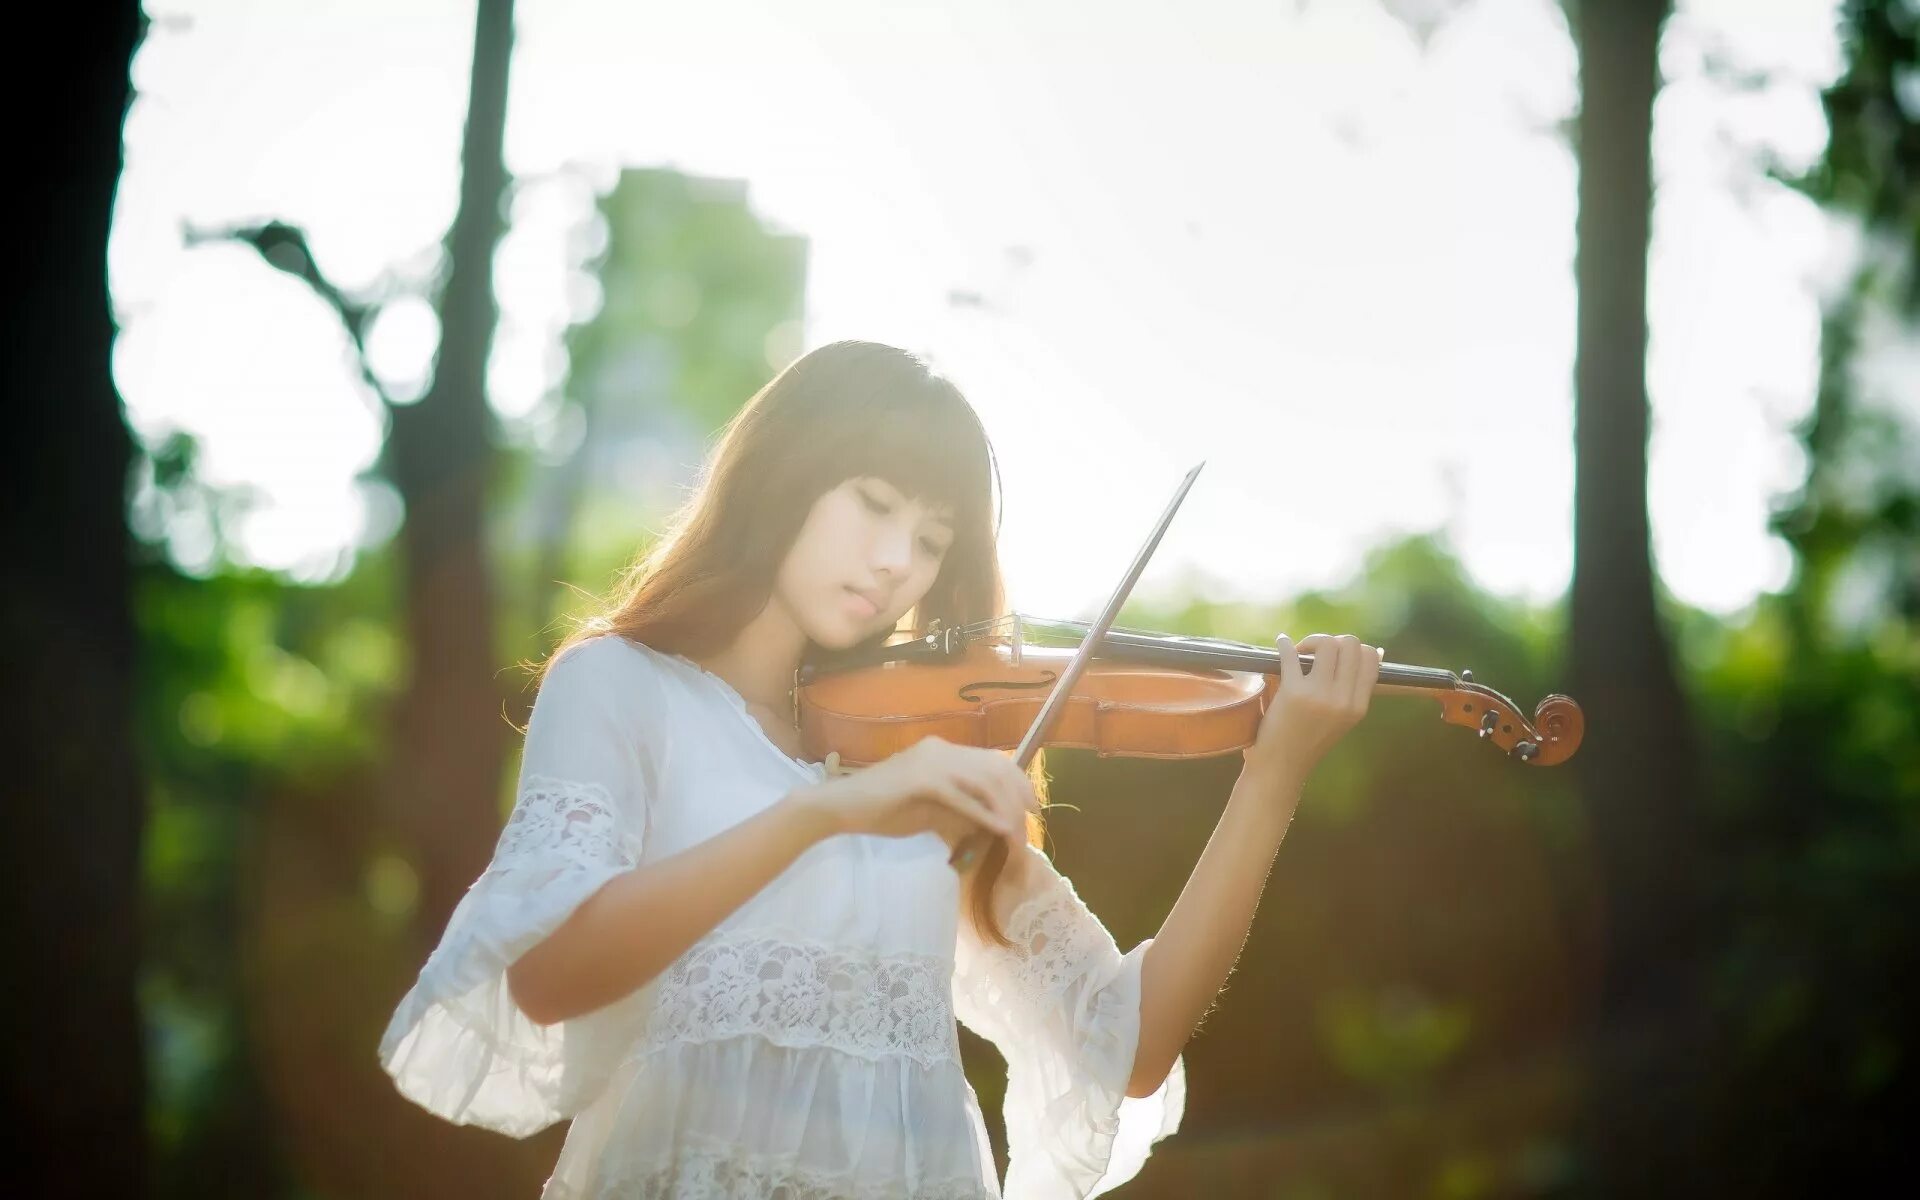 Девушки со скрипкой. Девочка со скрипкой. Фотосессия со скрипкой. Скрипка на природе. Девушка скрипачка